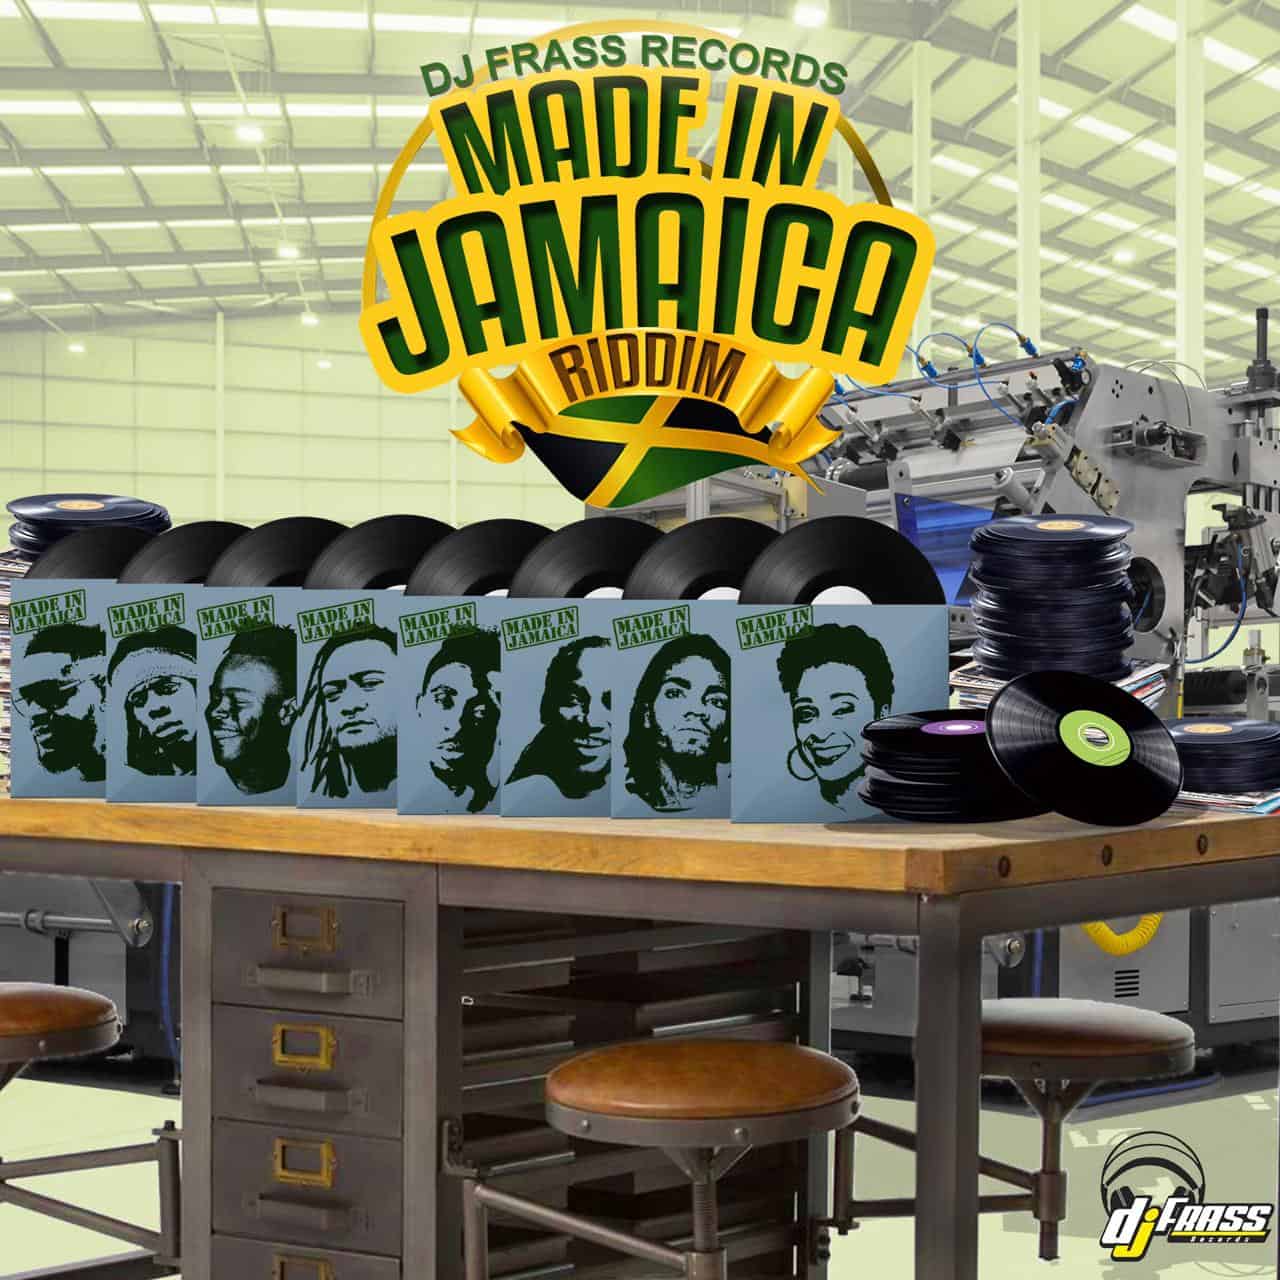 Made In Jamaica Riddim - DJ Frass Records